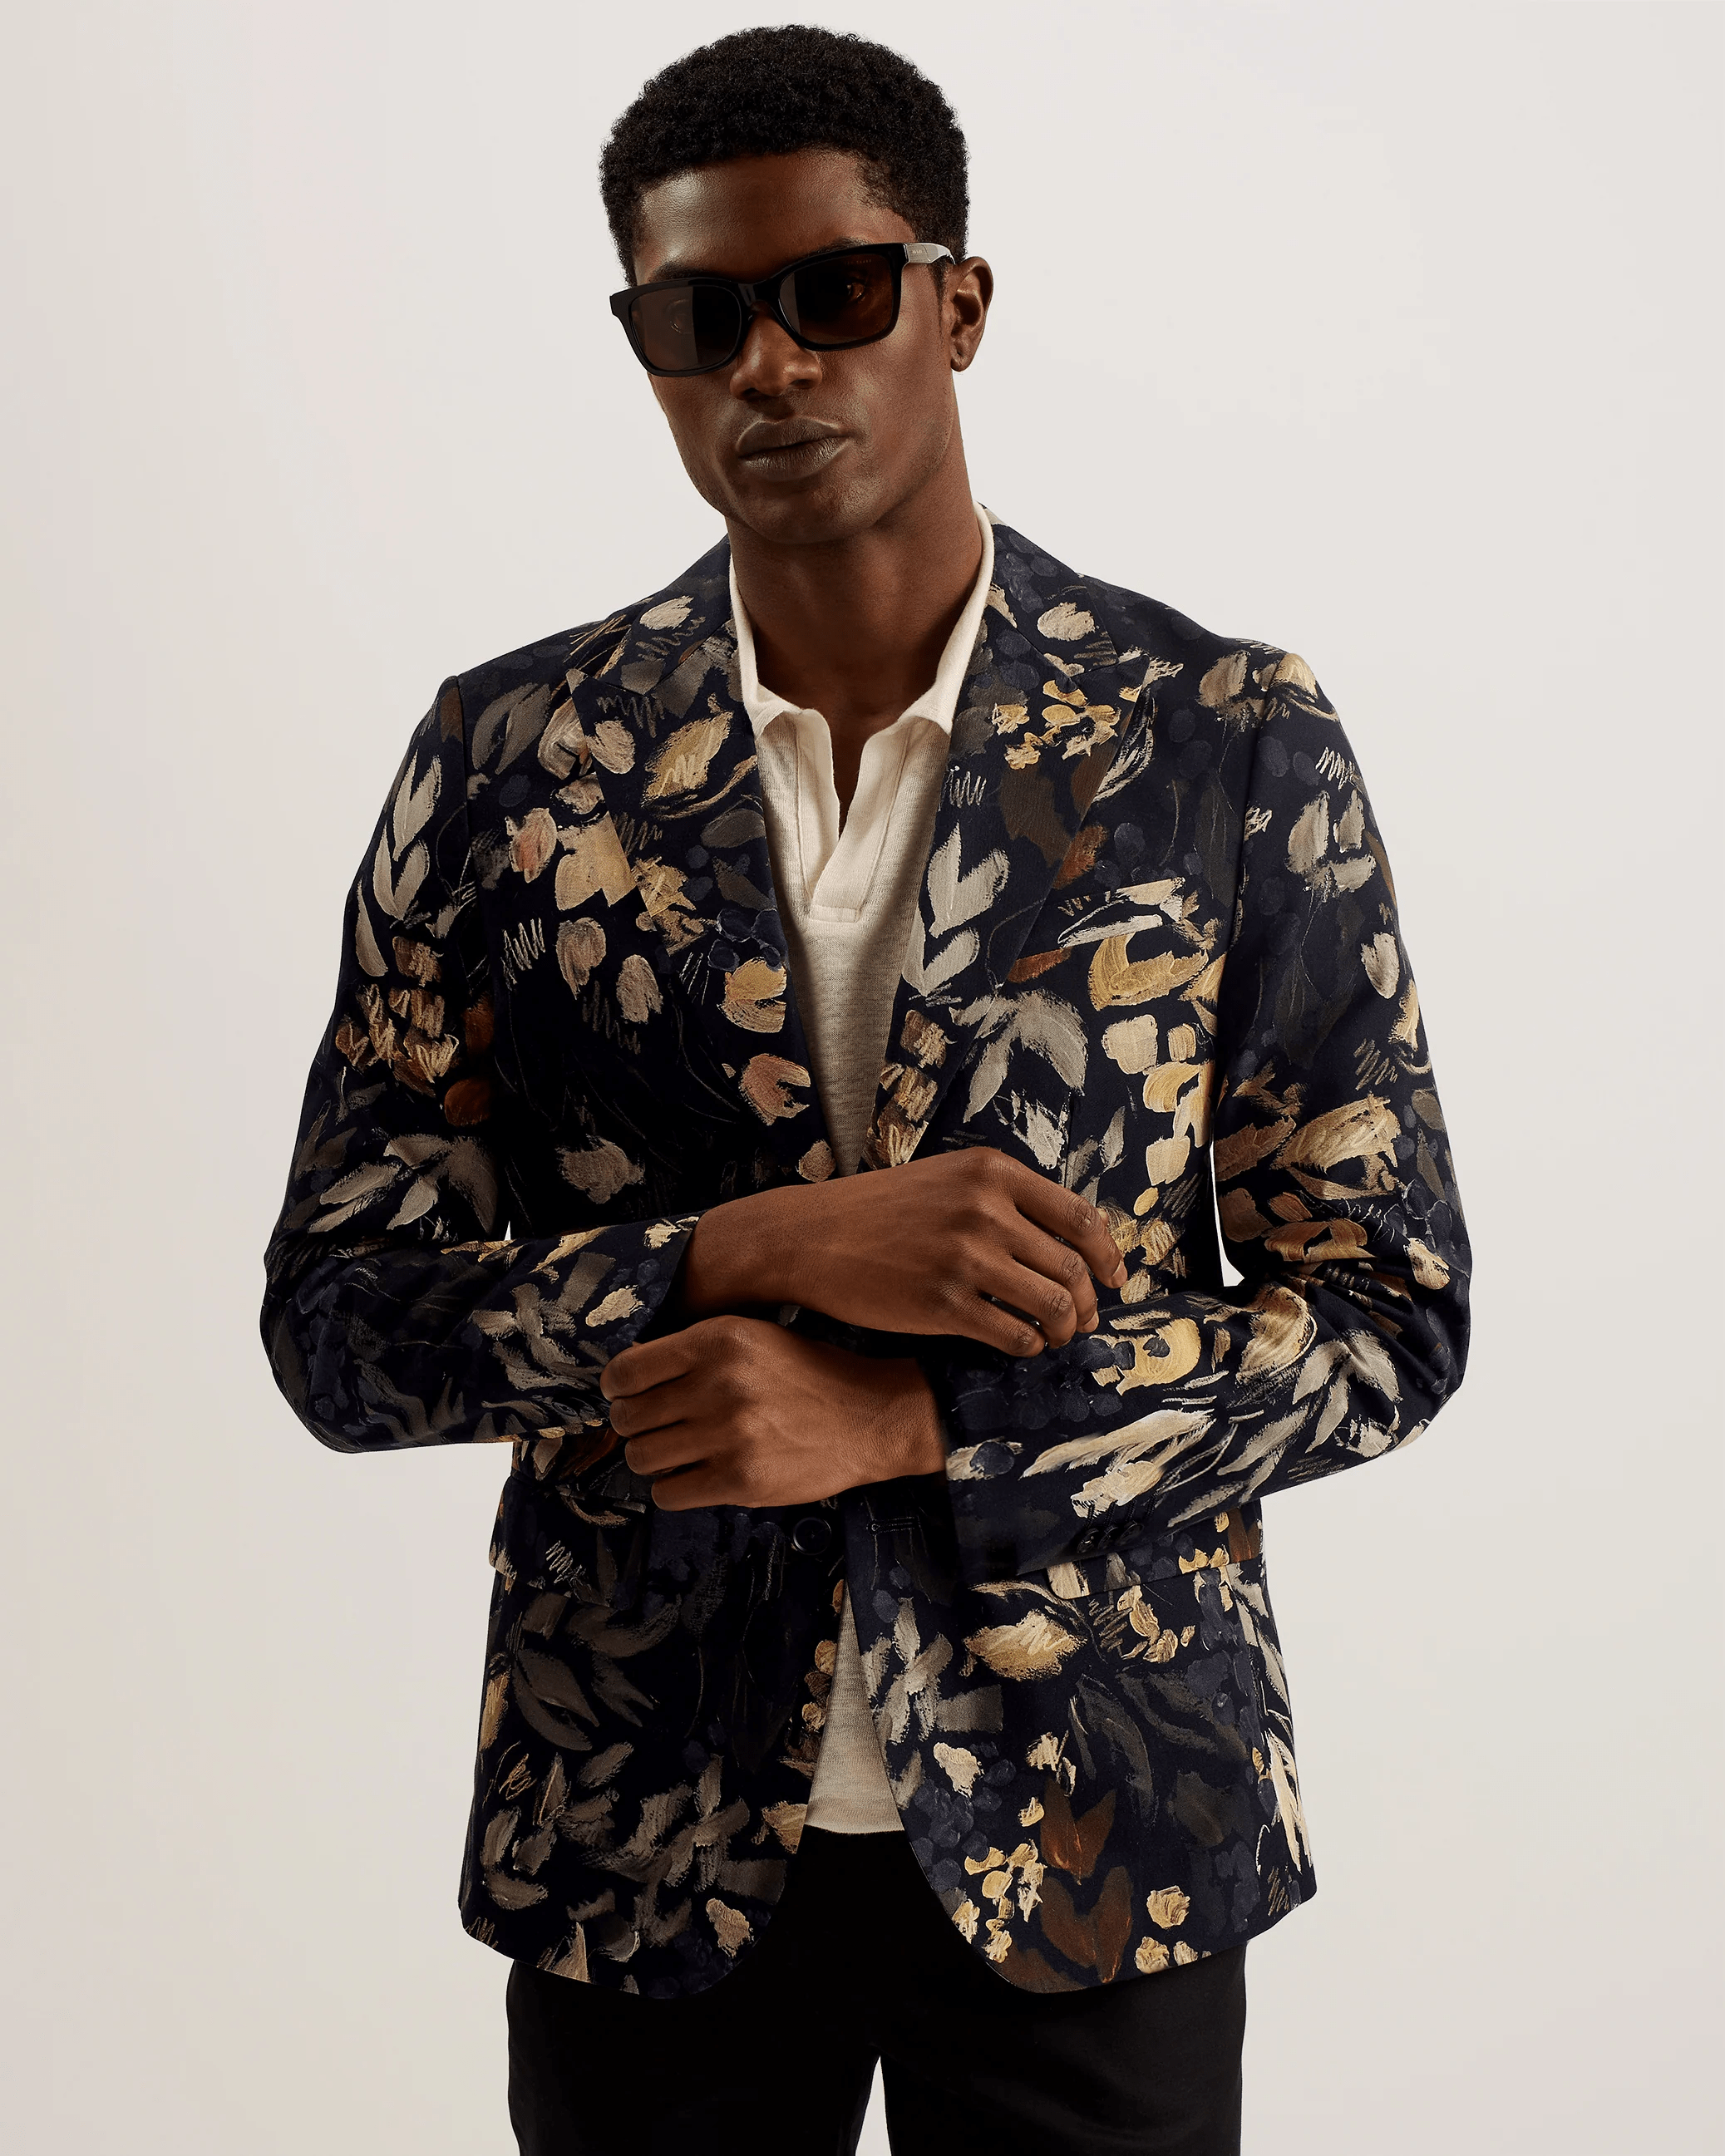 man dressed in blazer, dress shirt and wearing sunglasses